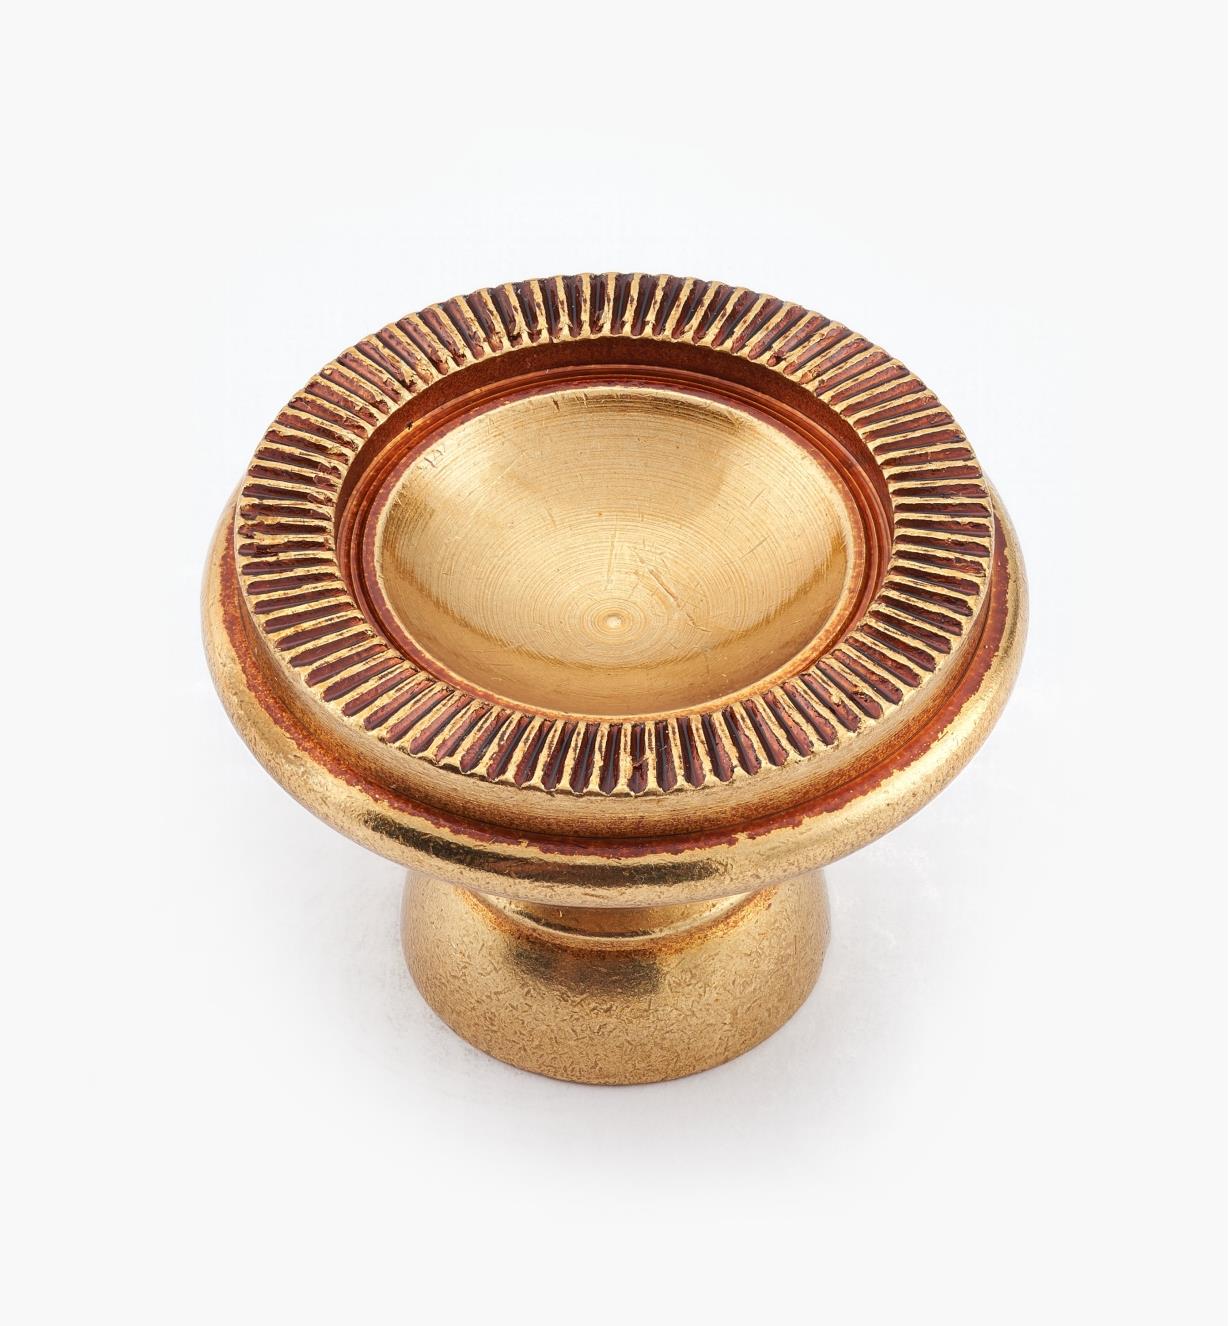 01A5884 - 35mm × 25mm Antique Bronze Knob